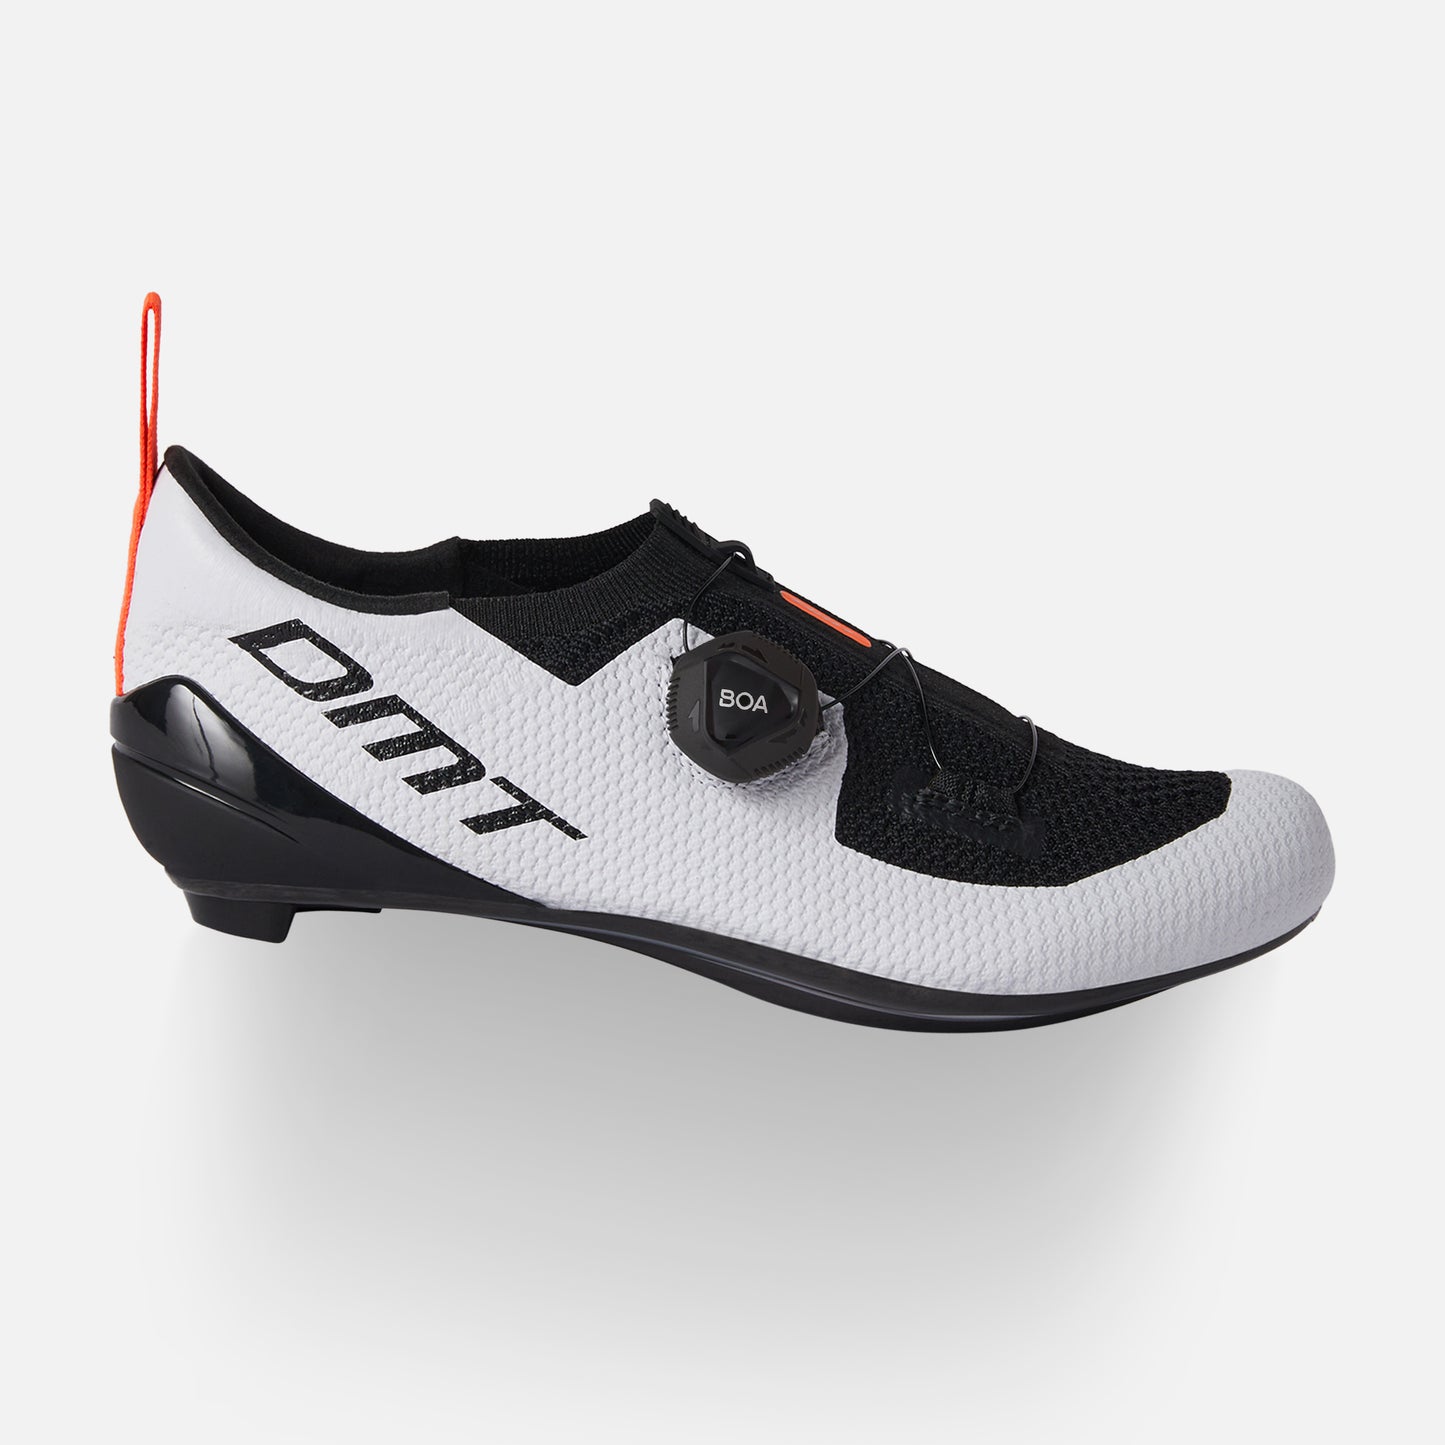 DMT Kt1 bike shoes White/Black - DMT Cycling